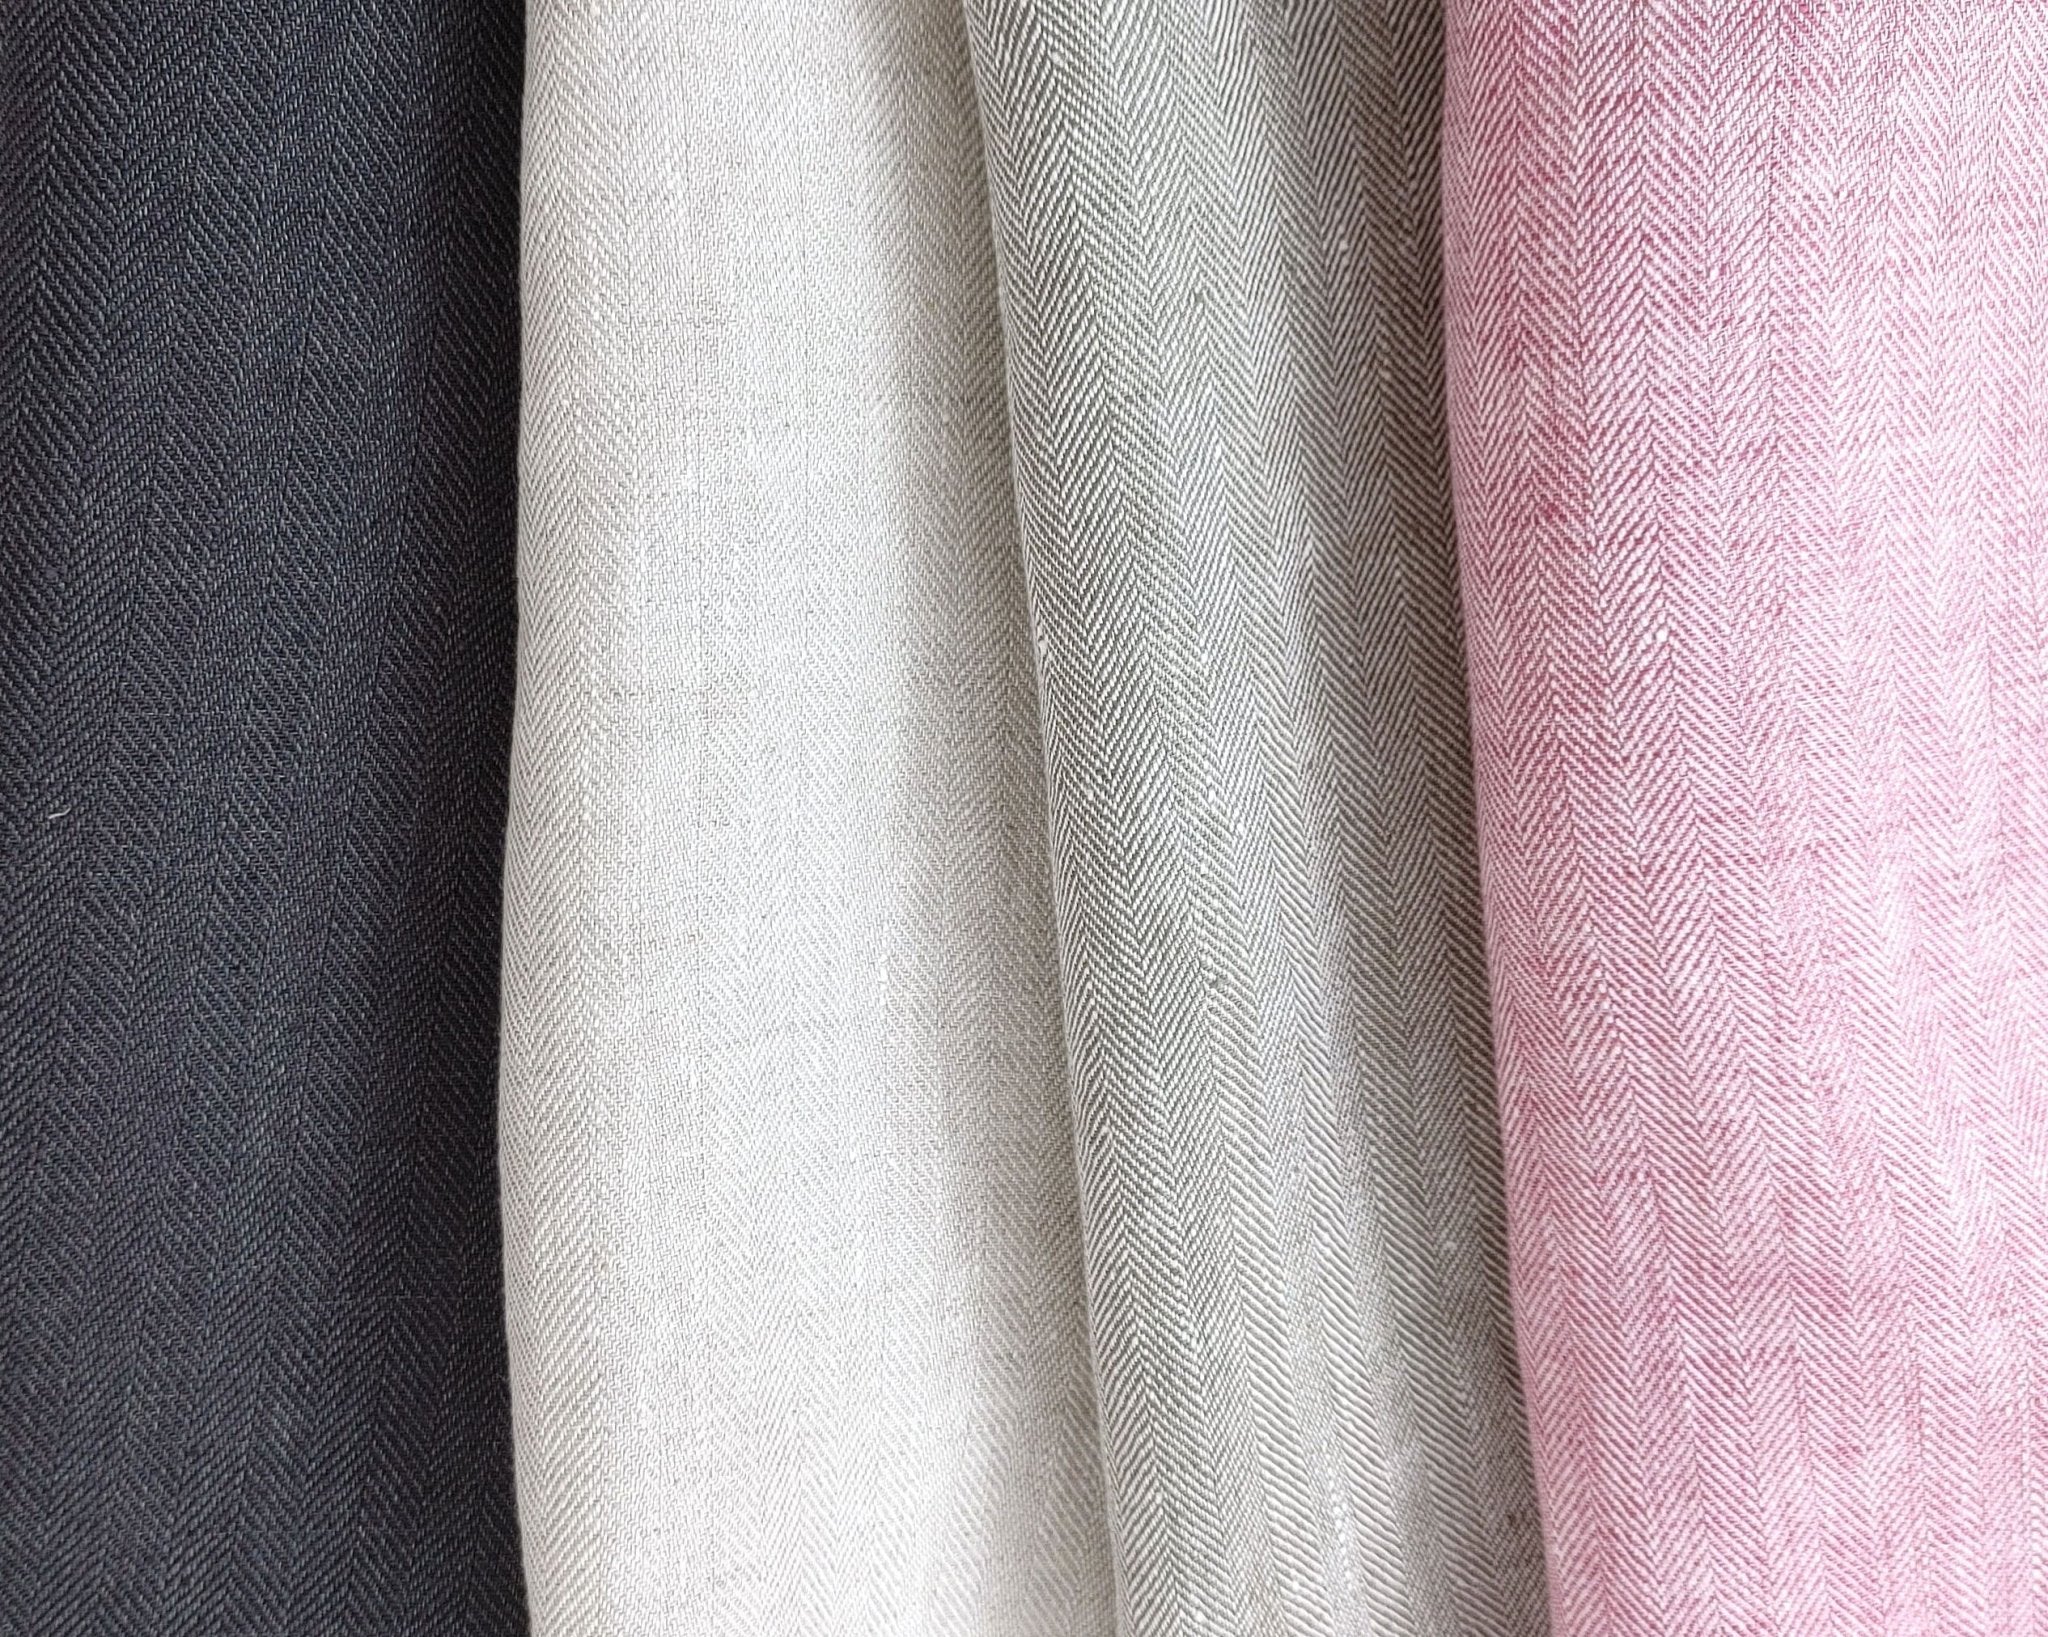 100% Linen Herringbone Twill HBT Fabric medium weight chambray 7313 7314 7727 7529 - The Linen Lab - Pink